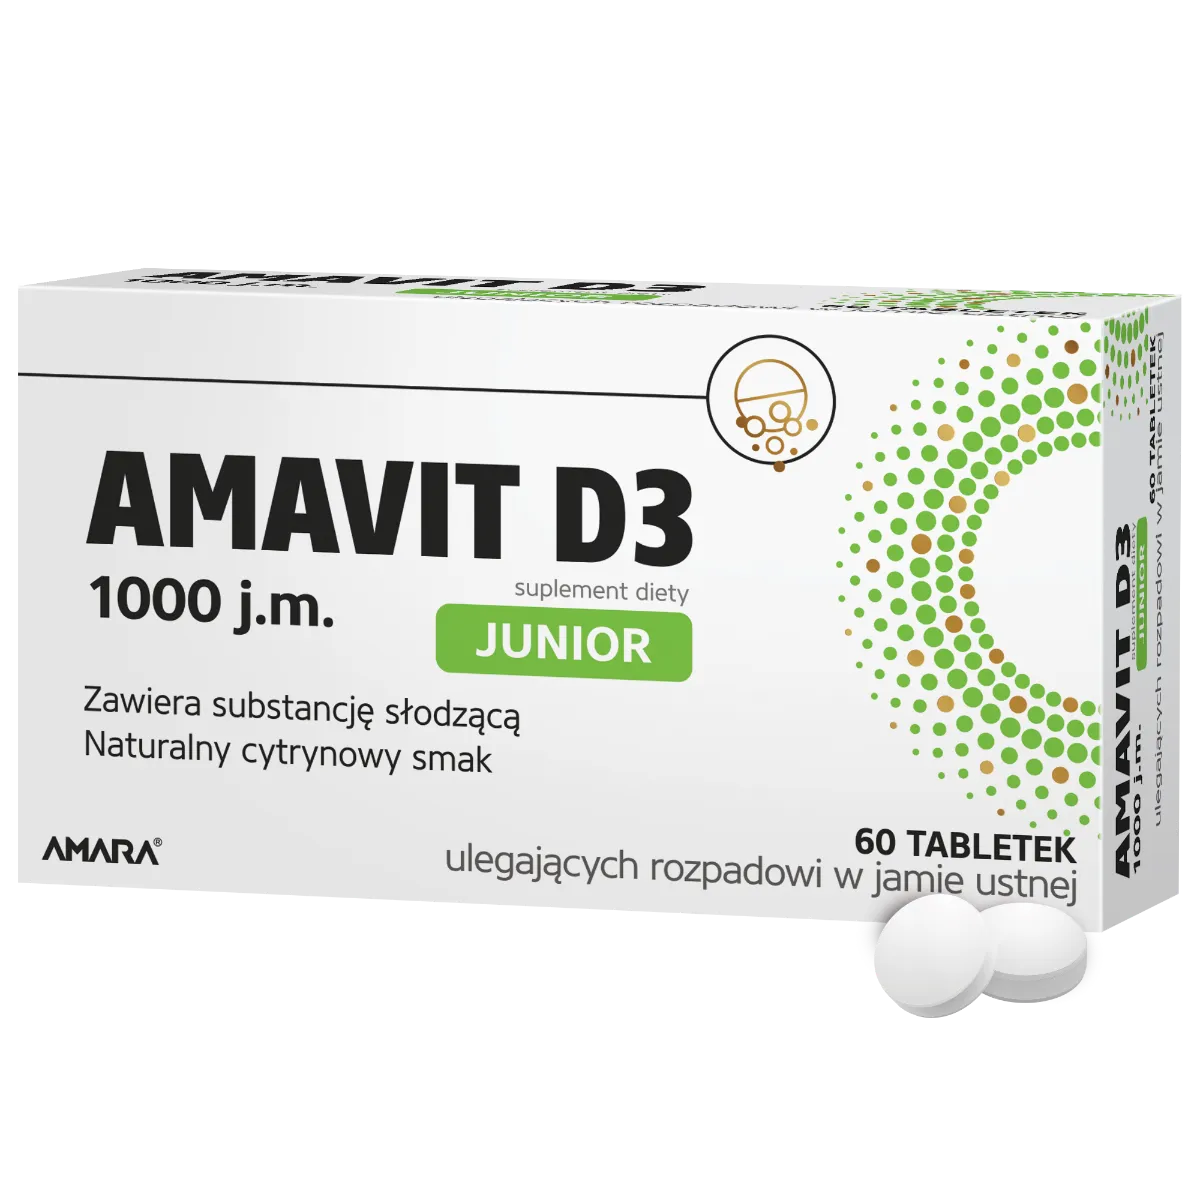 Amavit D3 Junior, 1000 j.m, suplement diety, 60 tabletek ODT